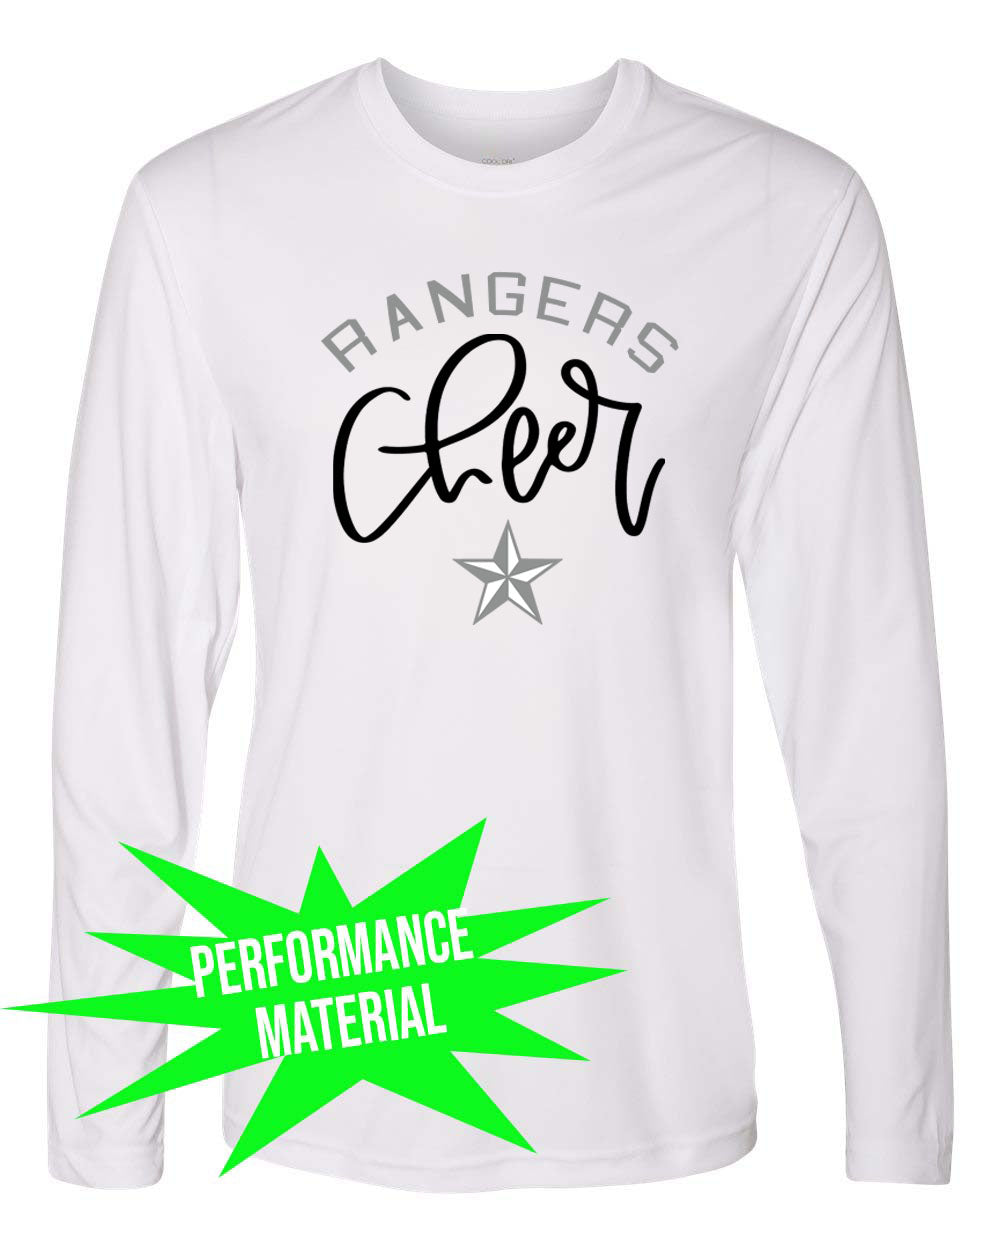 Wallkill Cheer Performance Material Design 4 Long Sleeve Shirt